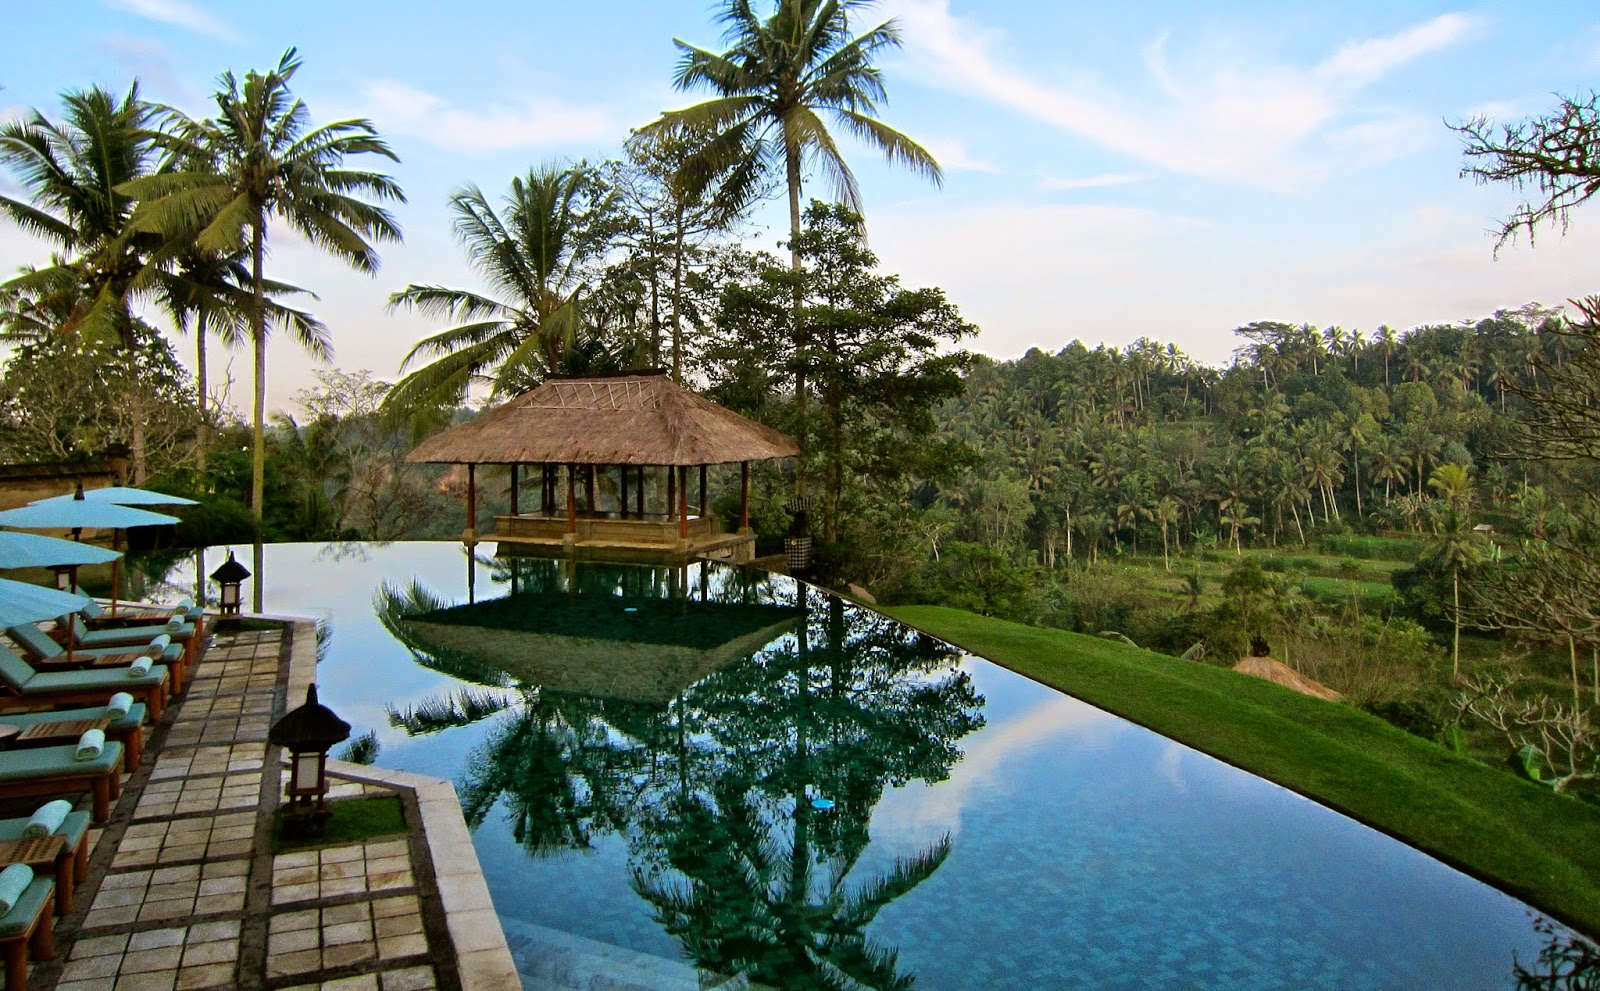 Luxury Hotels: Amandari Resort Bali Revealed